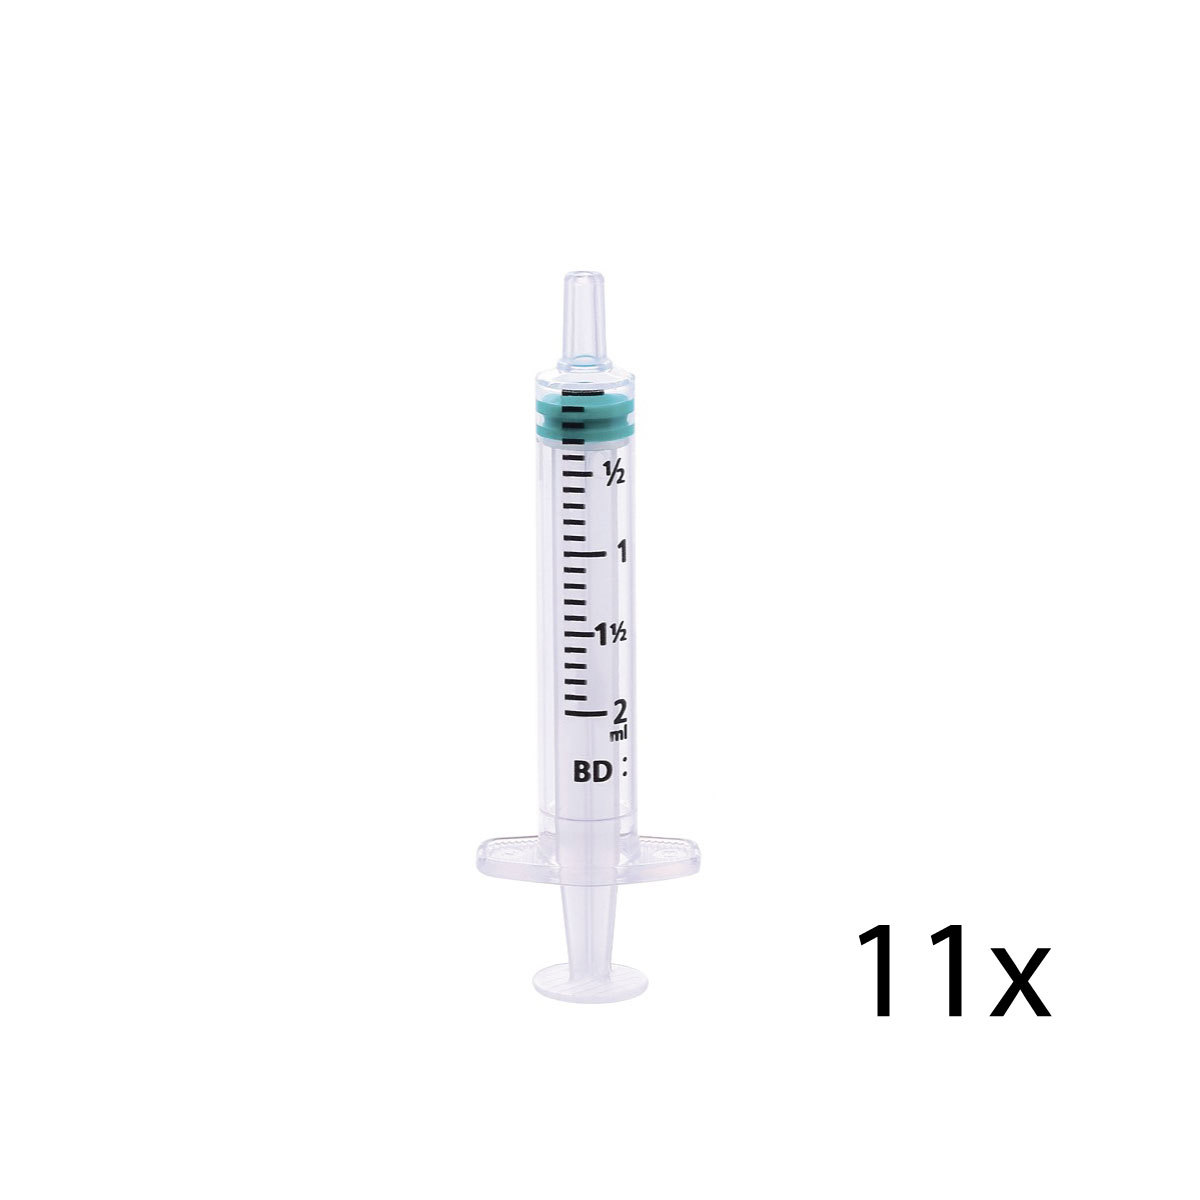 BD Emerald Syringe 2ml 11x Pack